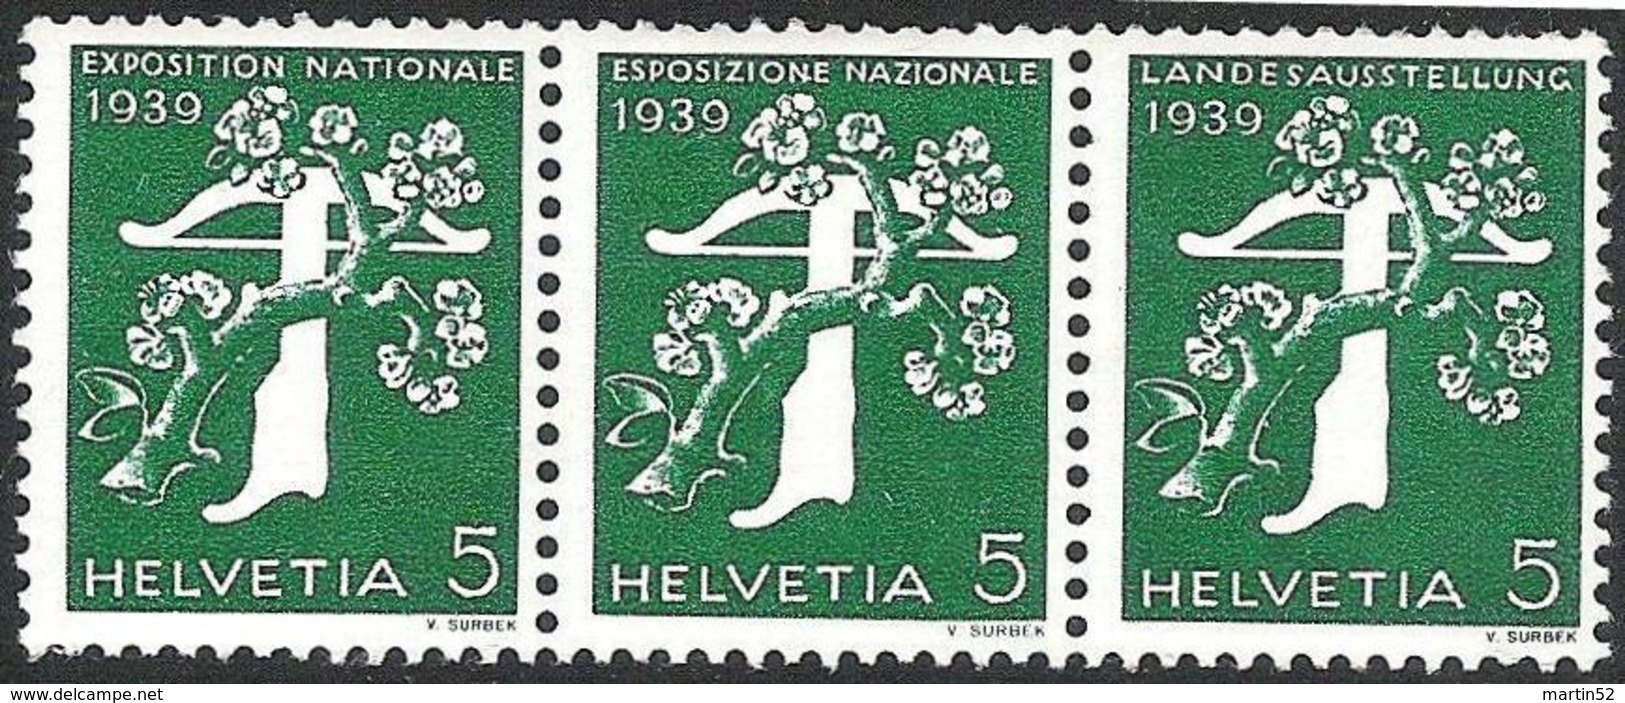 Schweiz Suisse 1939:RM Landi Expo Zu 228yR.01 + 232yR ** MNH Zu 236yR * Falz MLH  (Zu CHF 19.00) - Coil Stamps